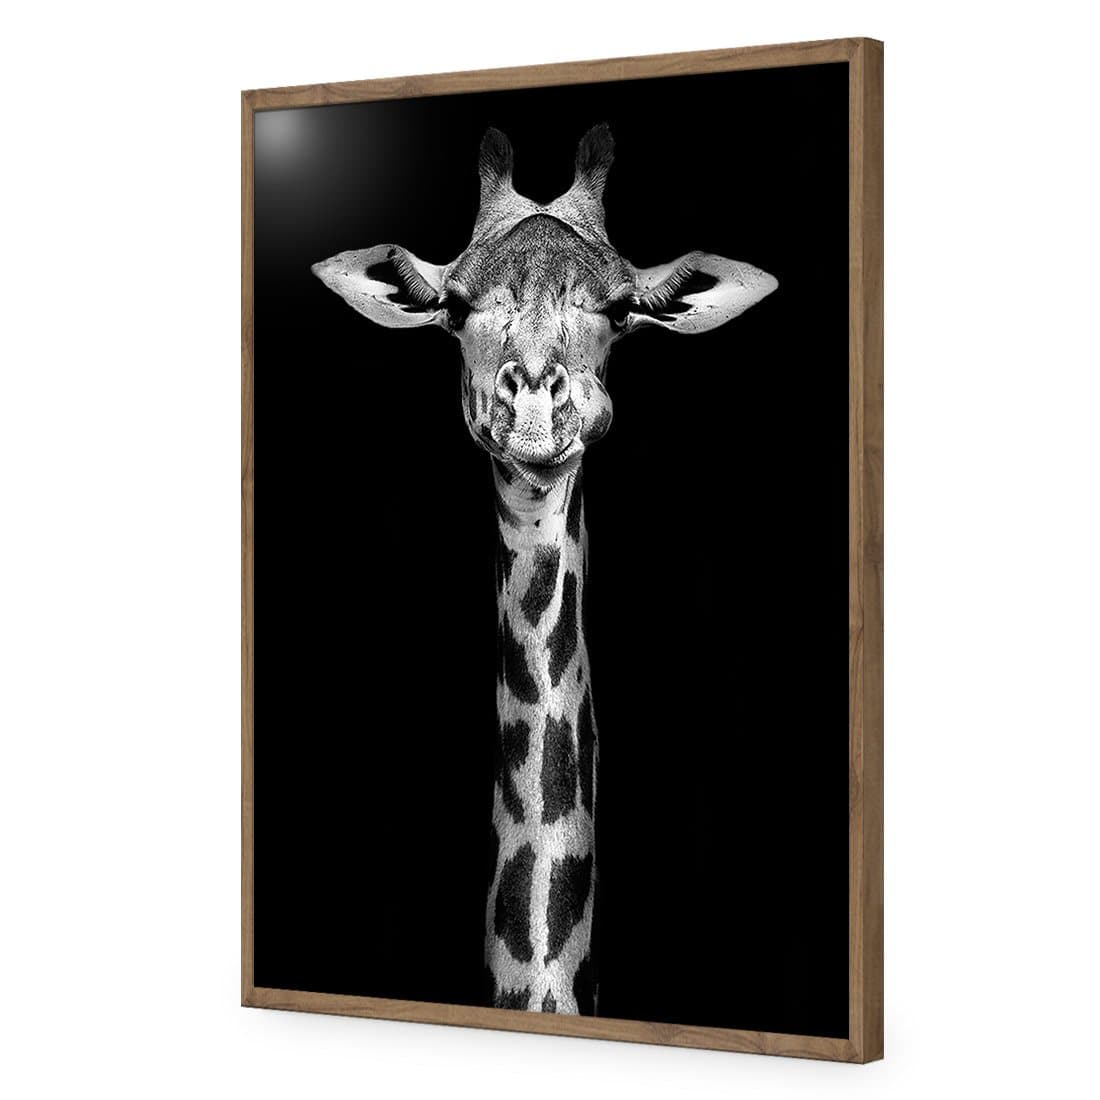 Thornycroft Giraffe-Acrylic-Wall Art Design-Without Border-Acrylic - Natural Frame-45x30cm-Wall Art Designs